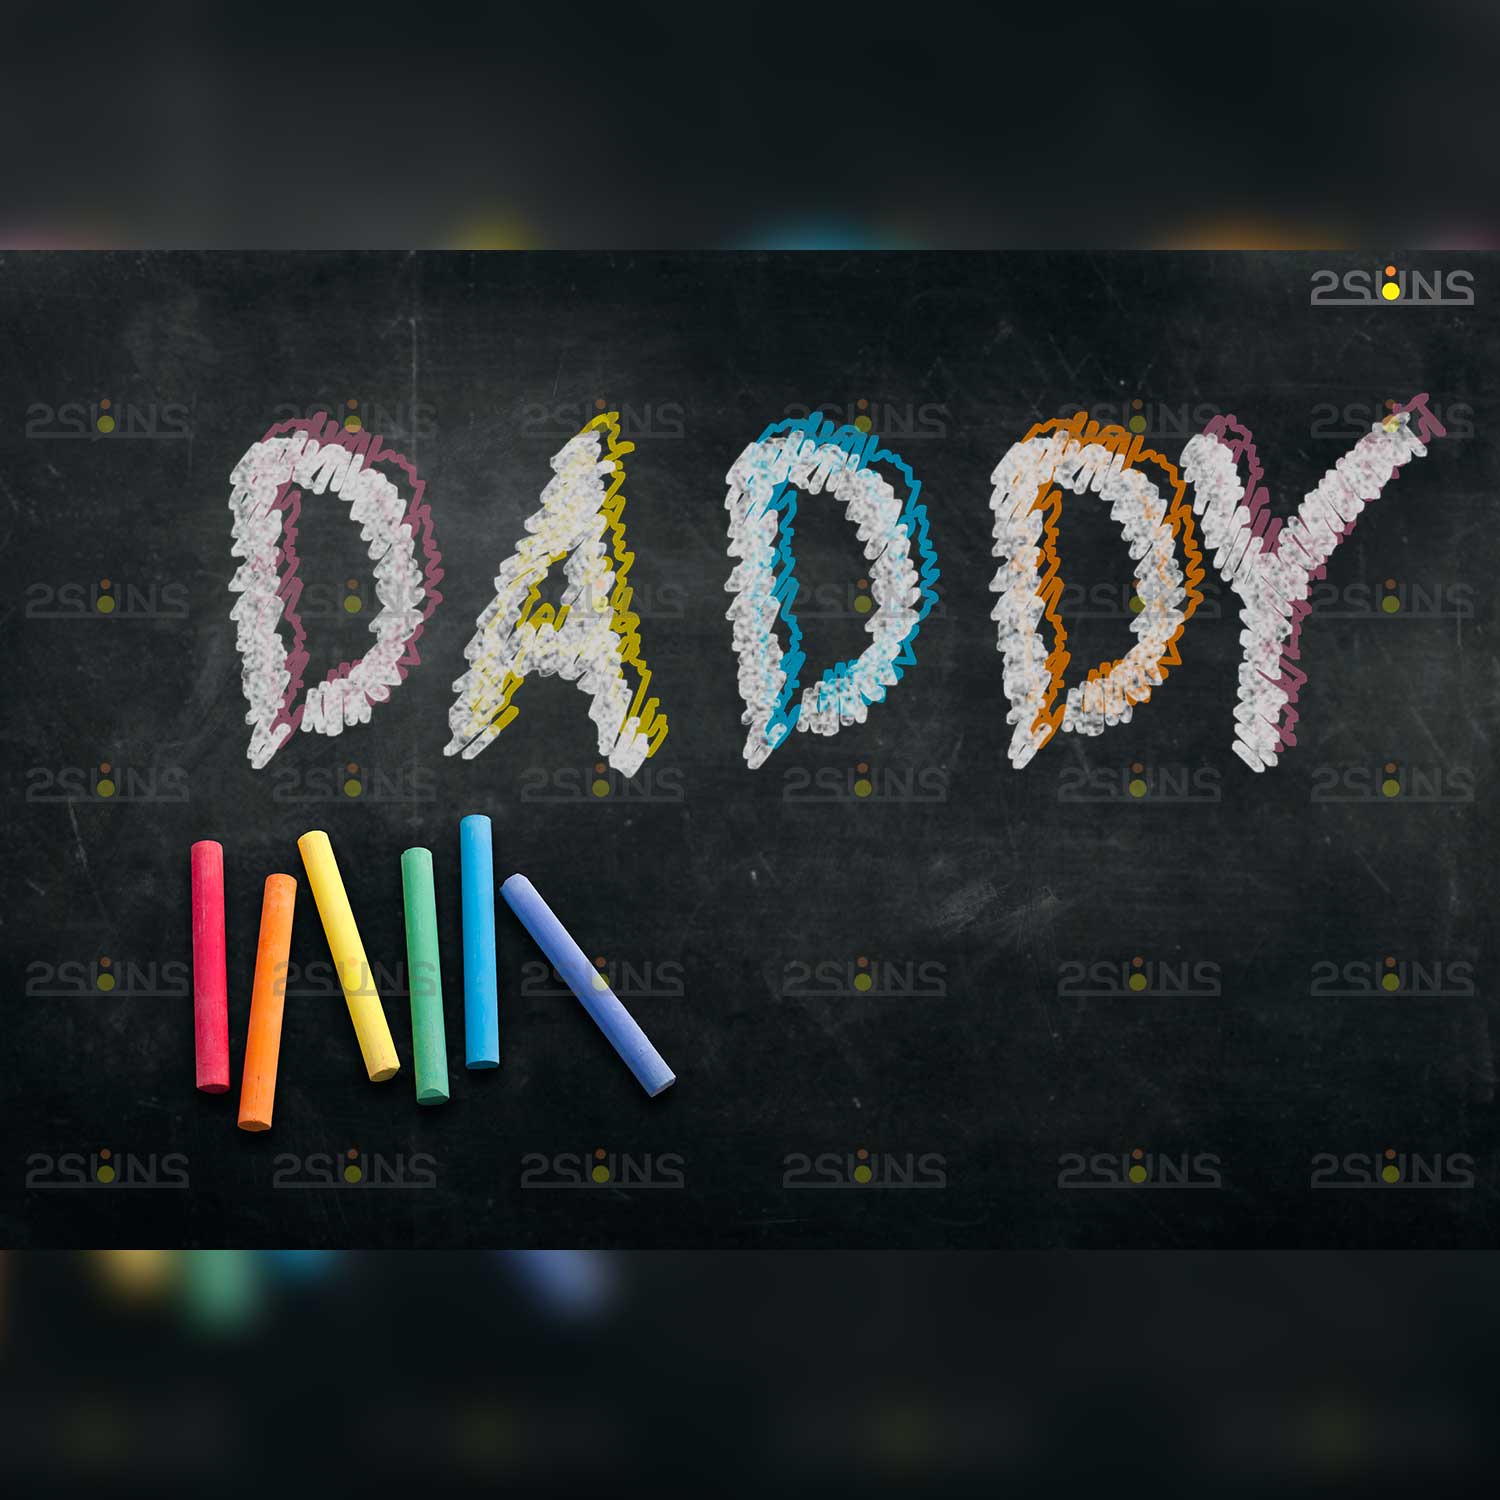 Fathers Day Sidewalk Chalkboard Art Overlay Daddy text.